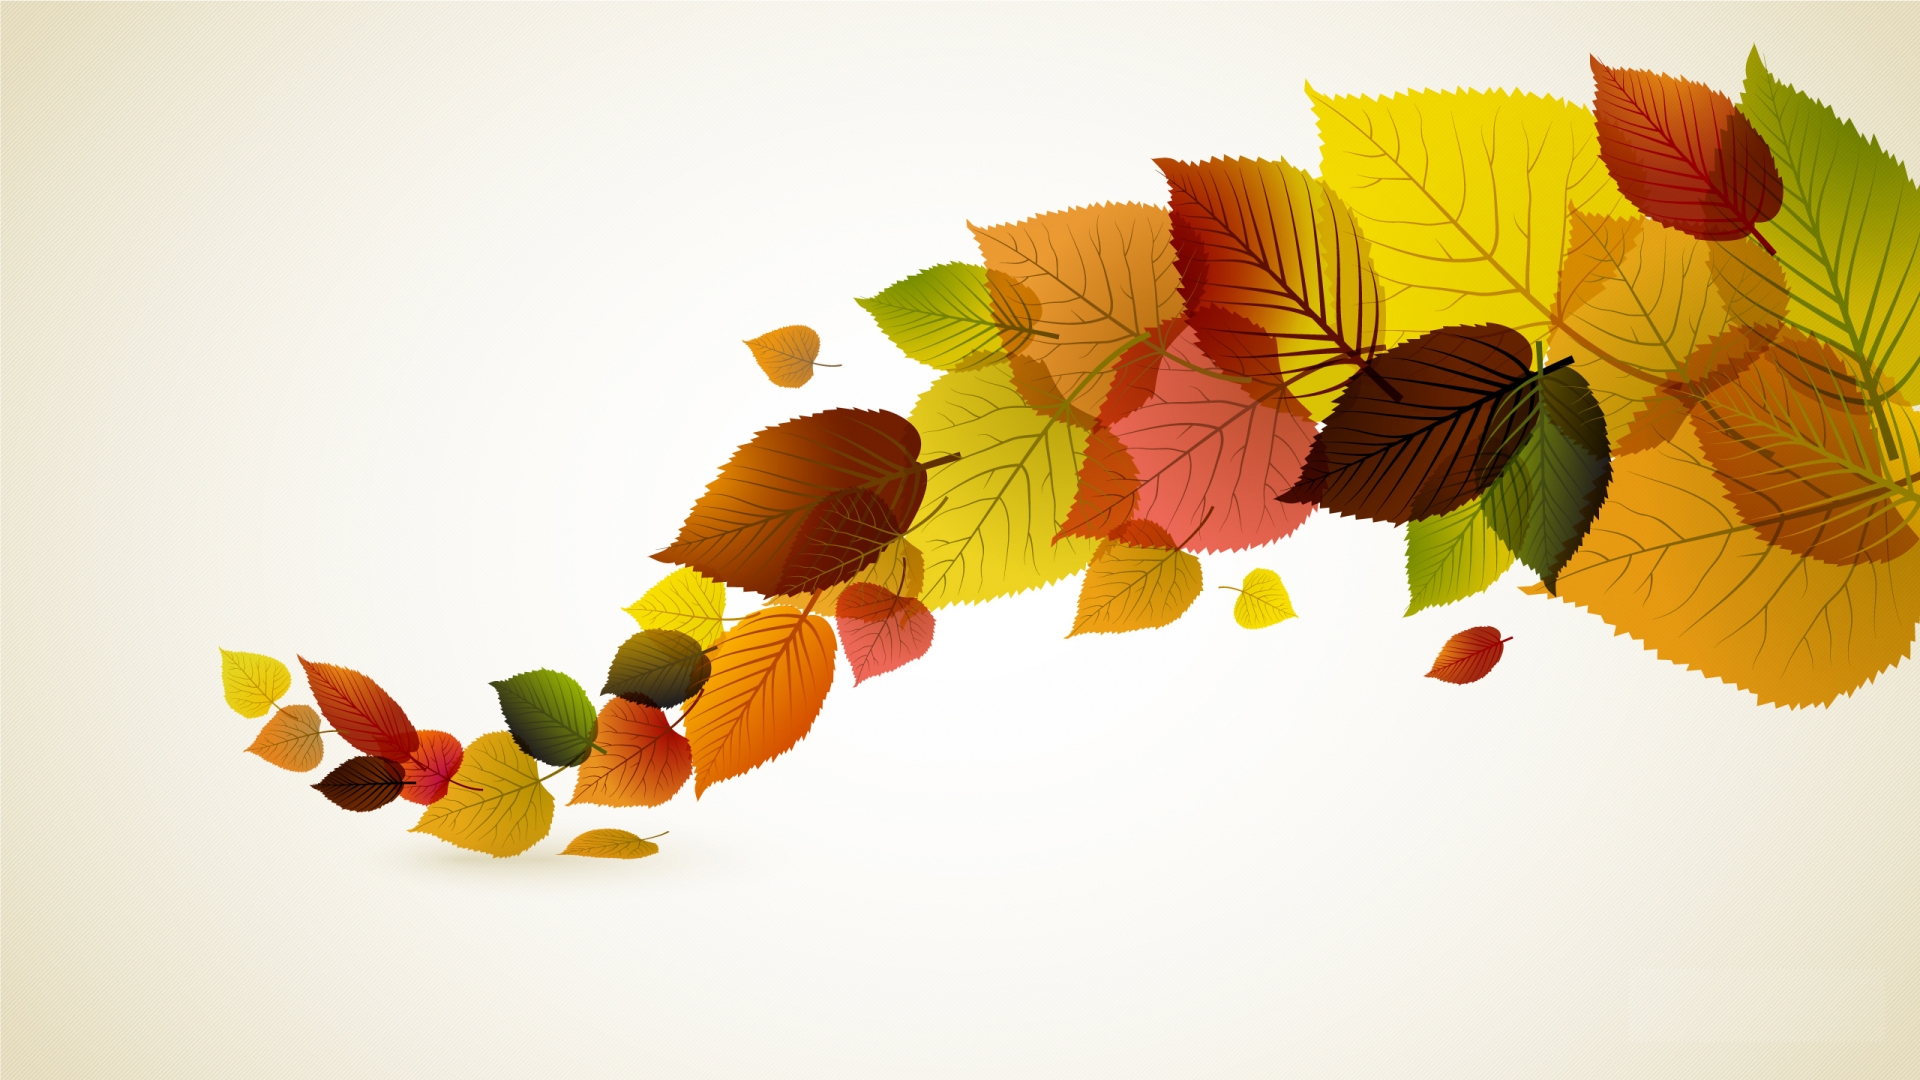 Autumn Leaves for 1920 x 1080 HDTV 1080p resolution